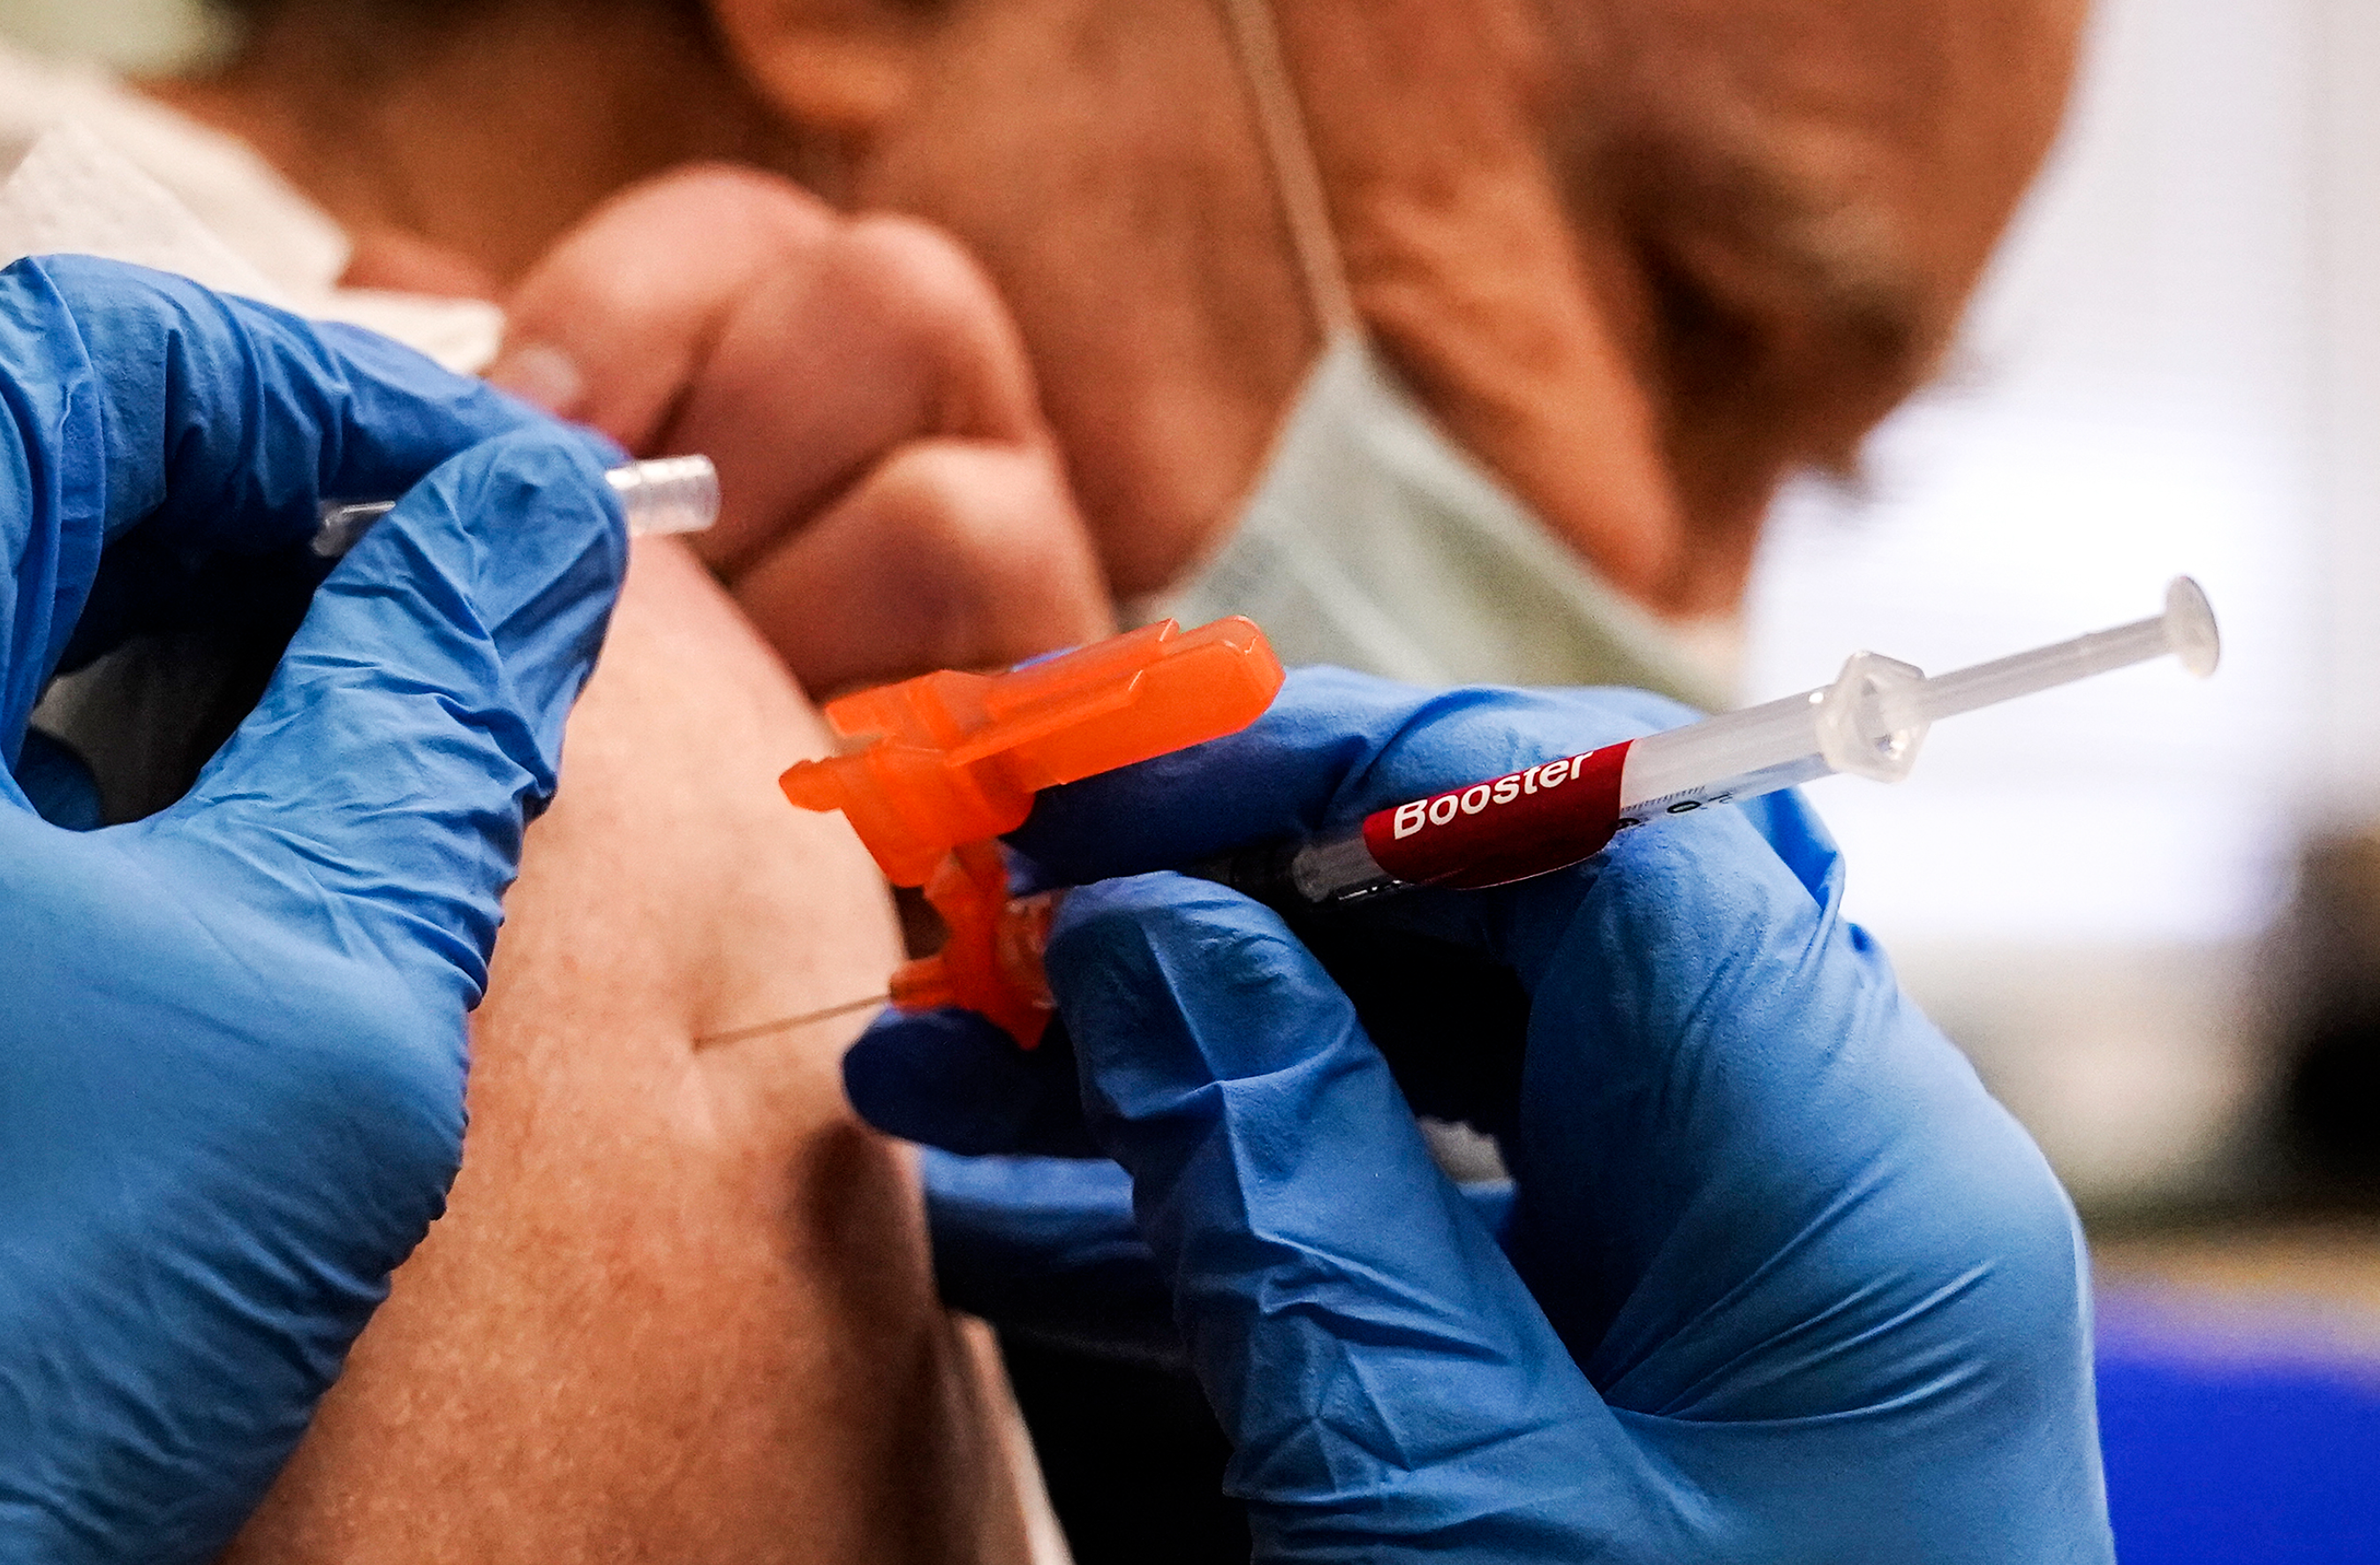 واکسن تقویتی کووید-۱۹ مدرنا در کانادا مجوز قابلیت ایجاد ایمنی در مقابل اومیکرون گرفت